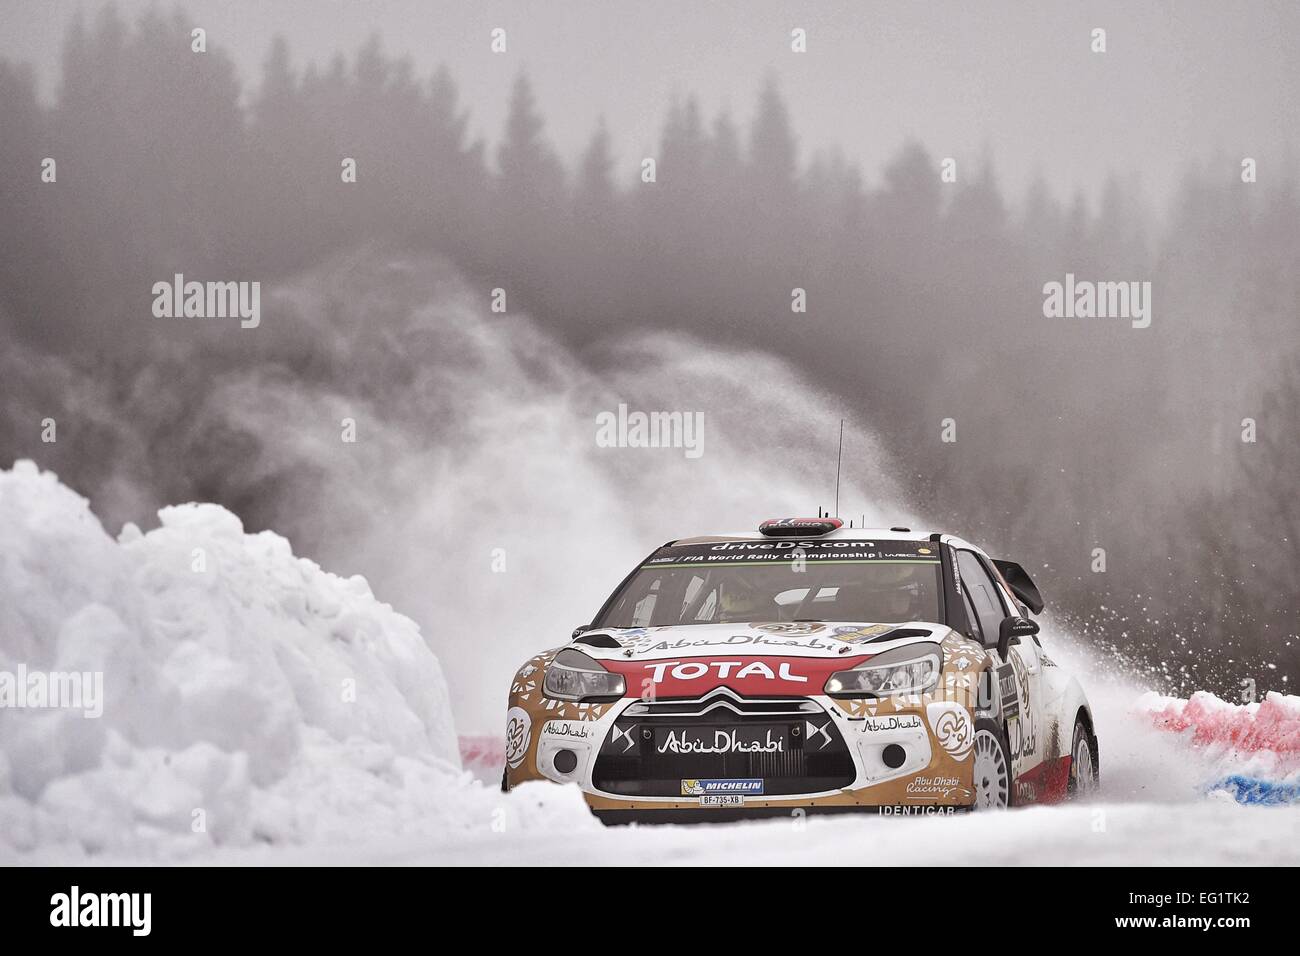 Schweden. 13. Februar 2015. Rallye-Weltmeisterschaft in Schweden. Mads Ostebrg (NOR) und Jonas Andersson (SWE) - Citroen DS3 WRC © Aktion Plus Sport/Alamy Live News Stockfoto